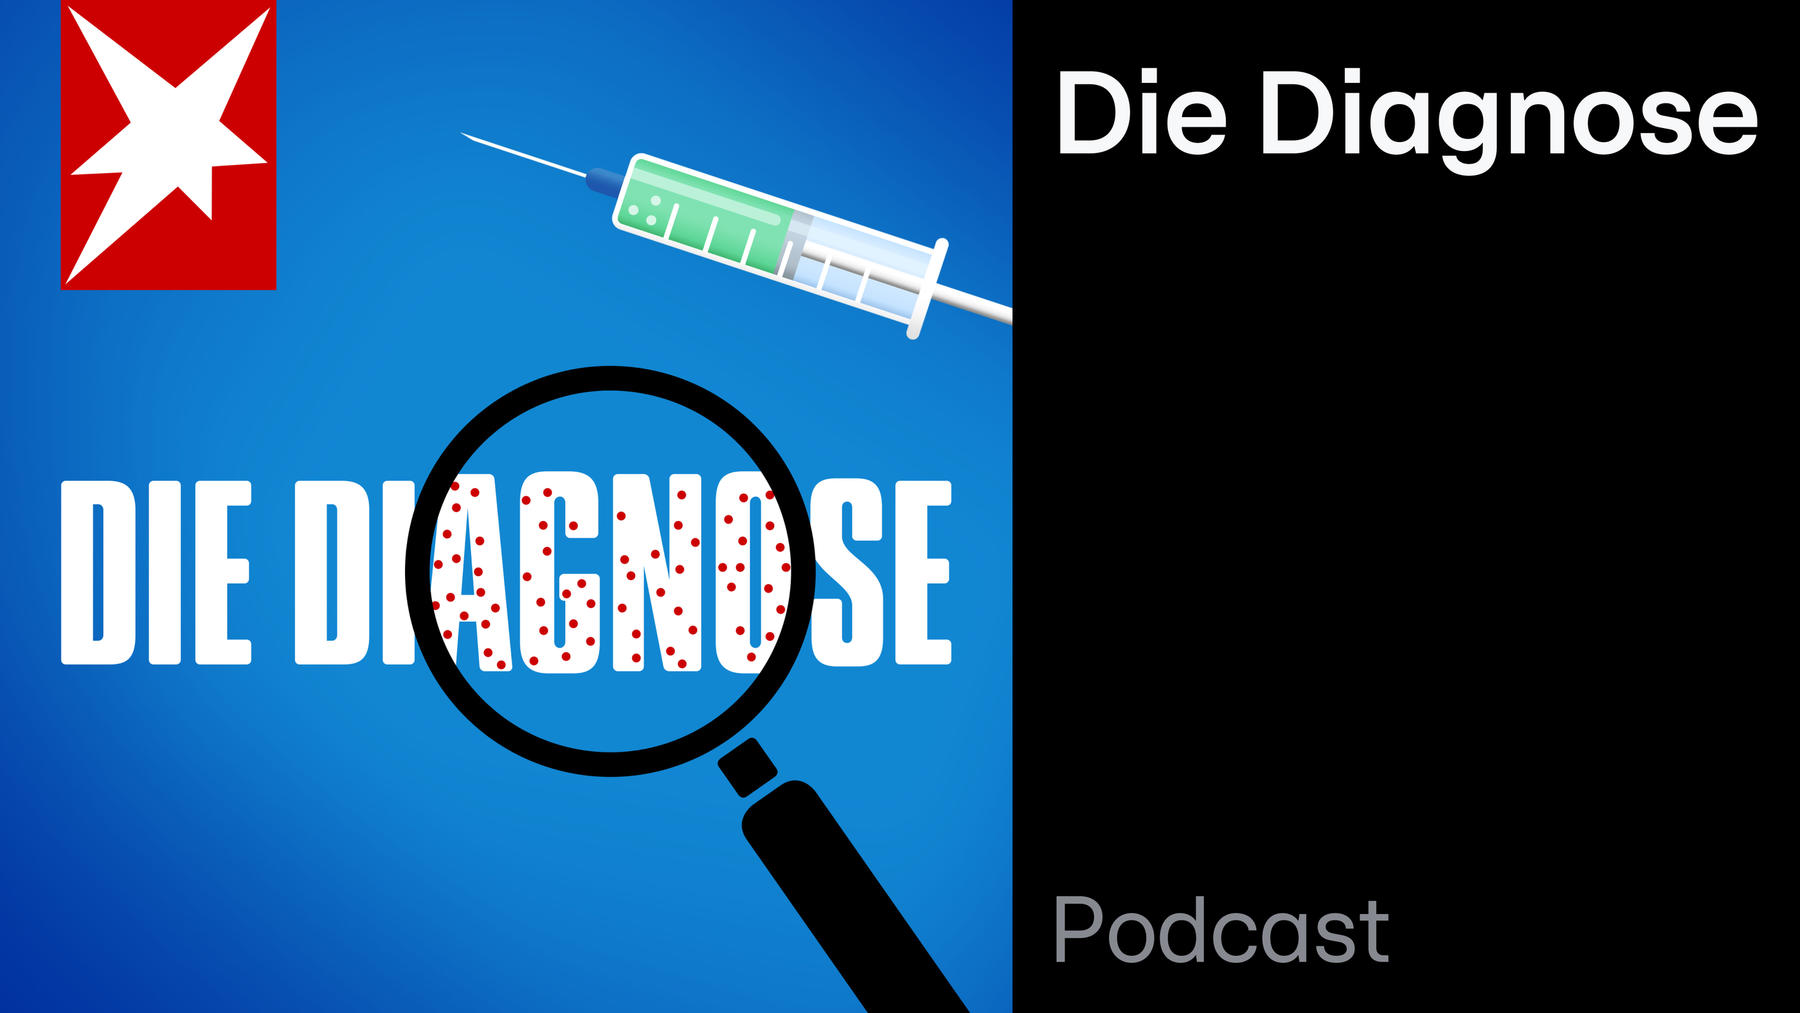 Podcast: Die Diagnose